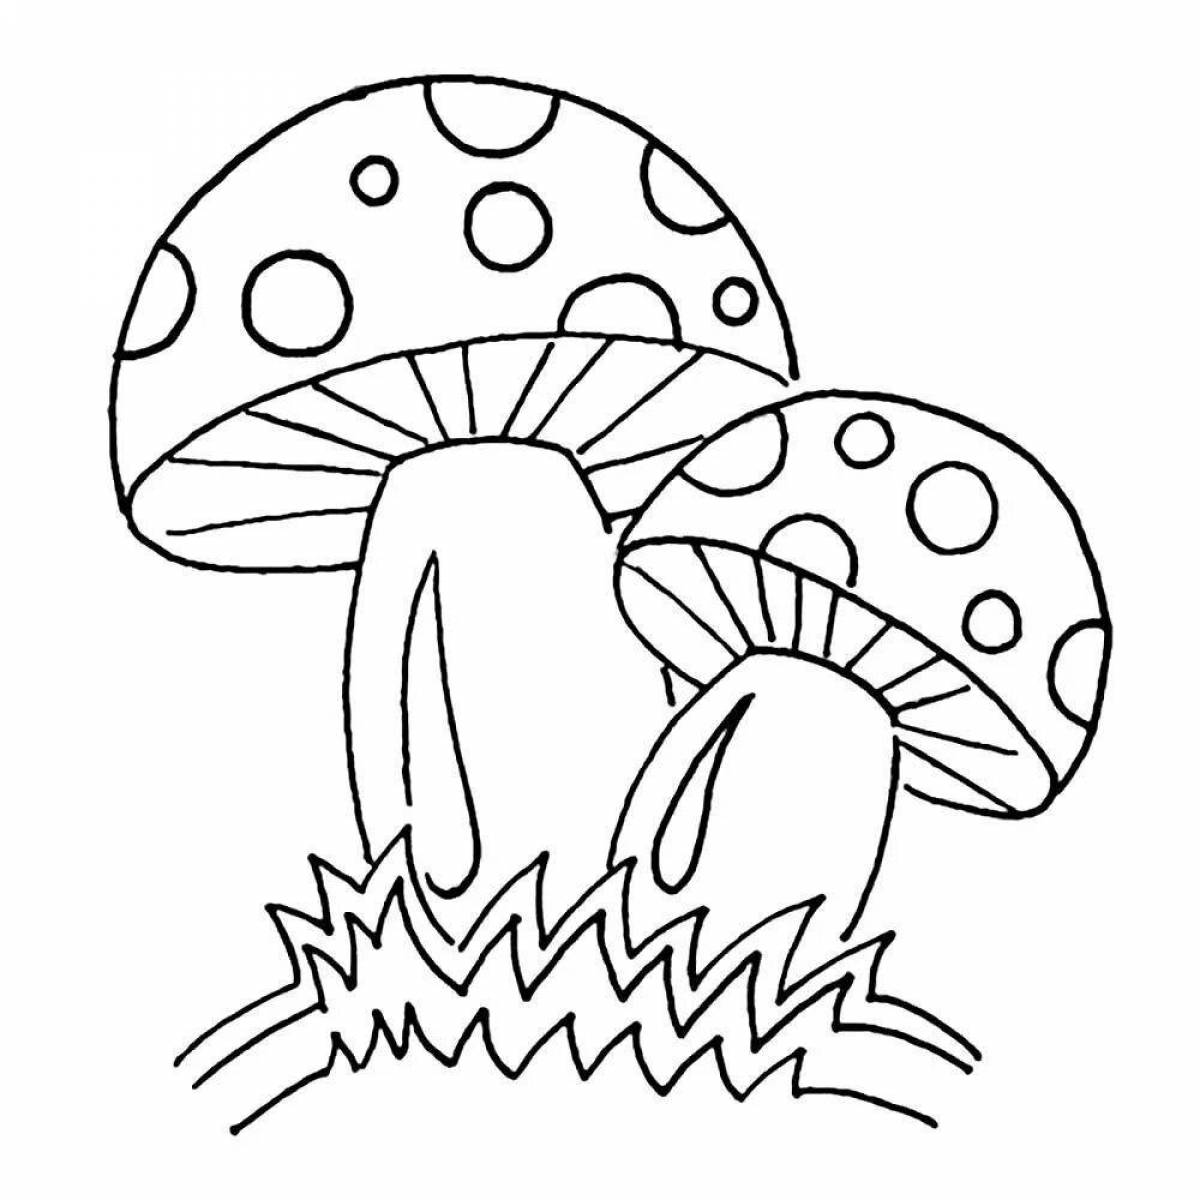 Festive coloring of mushrooms